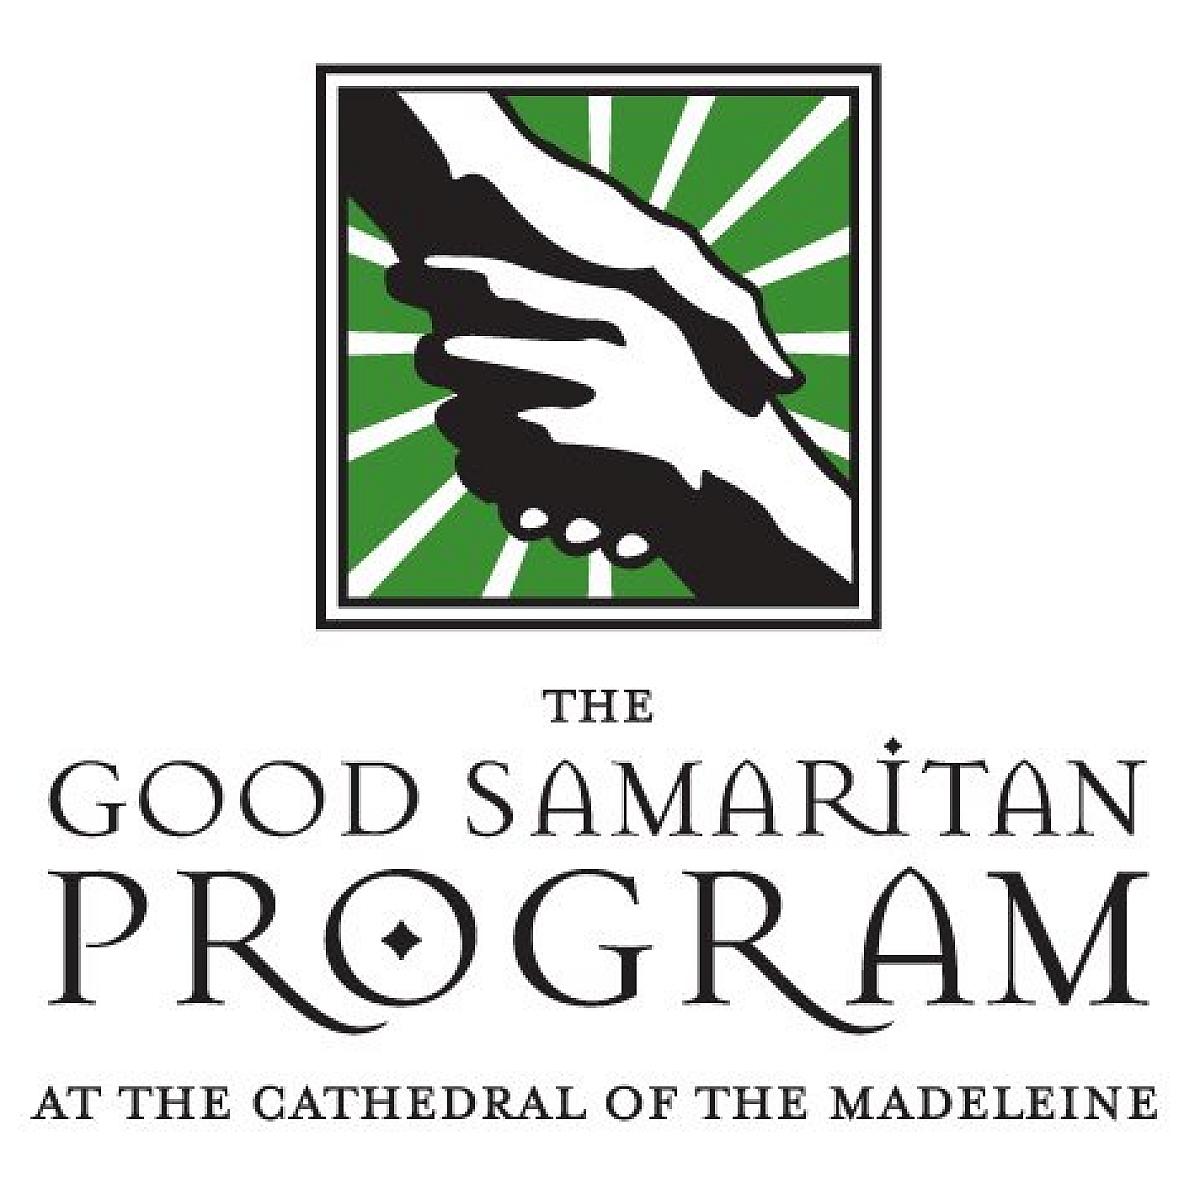 The Good Samaritan Program